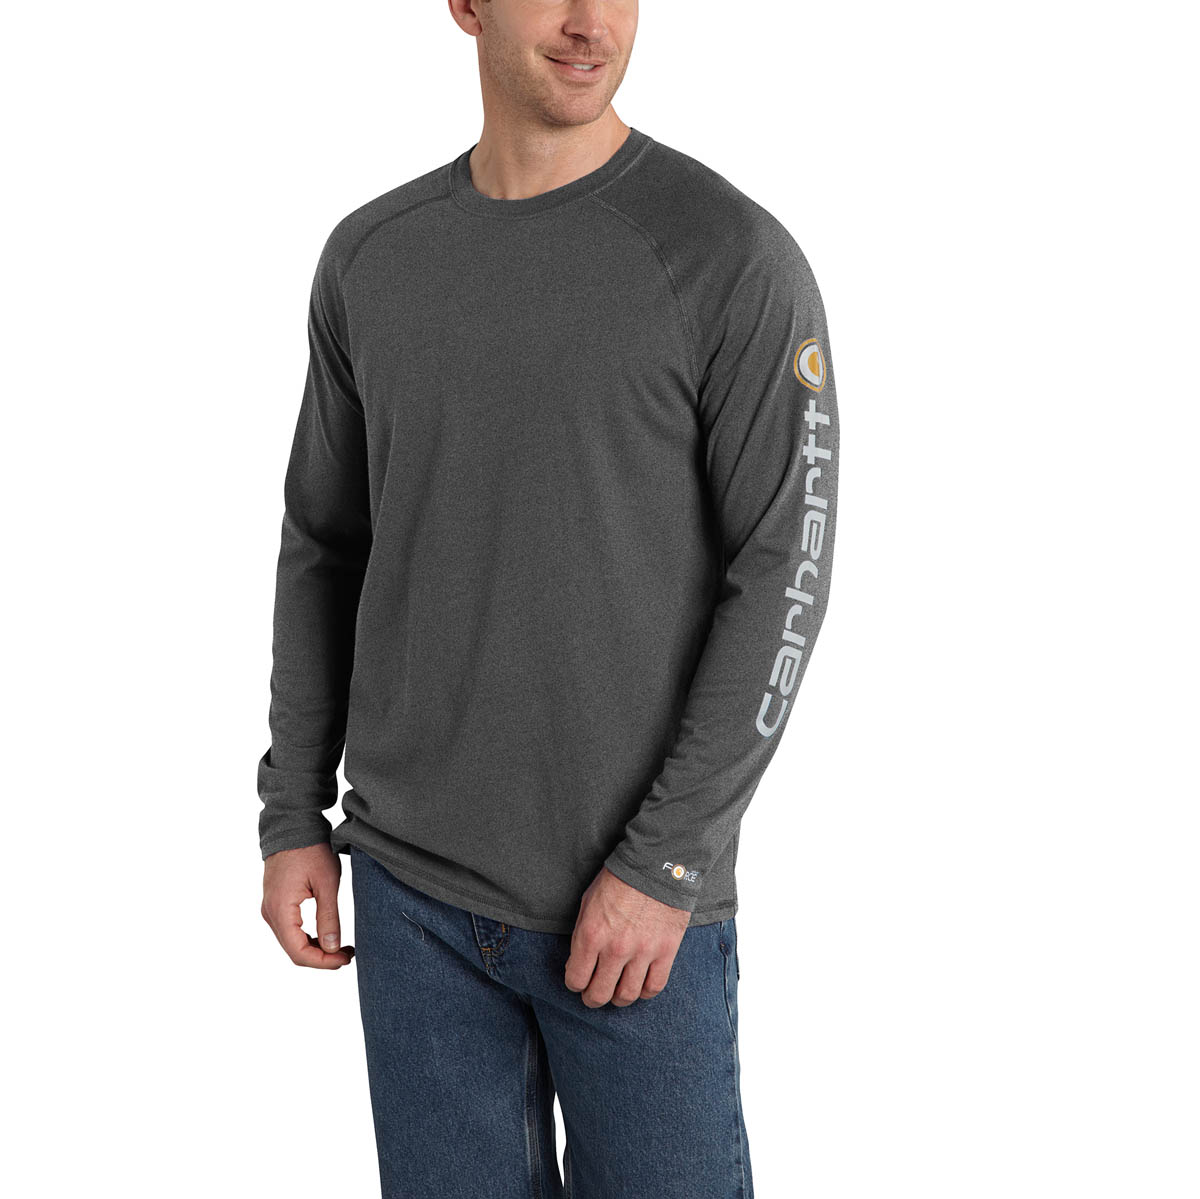 Carhartt Men's Force Cotton Delmont Sleeve Graphic T Shirt